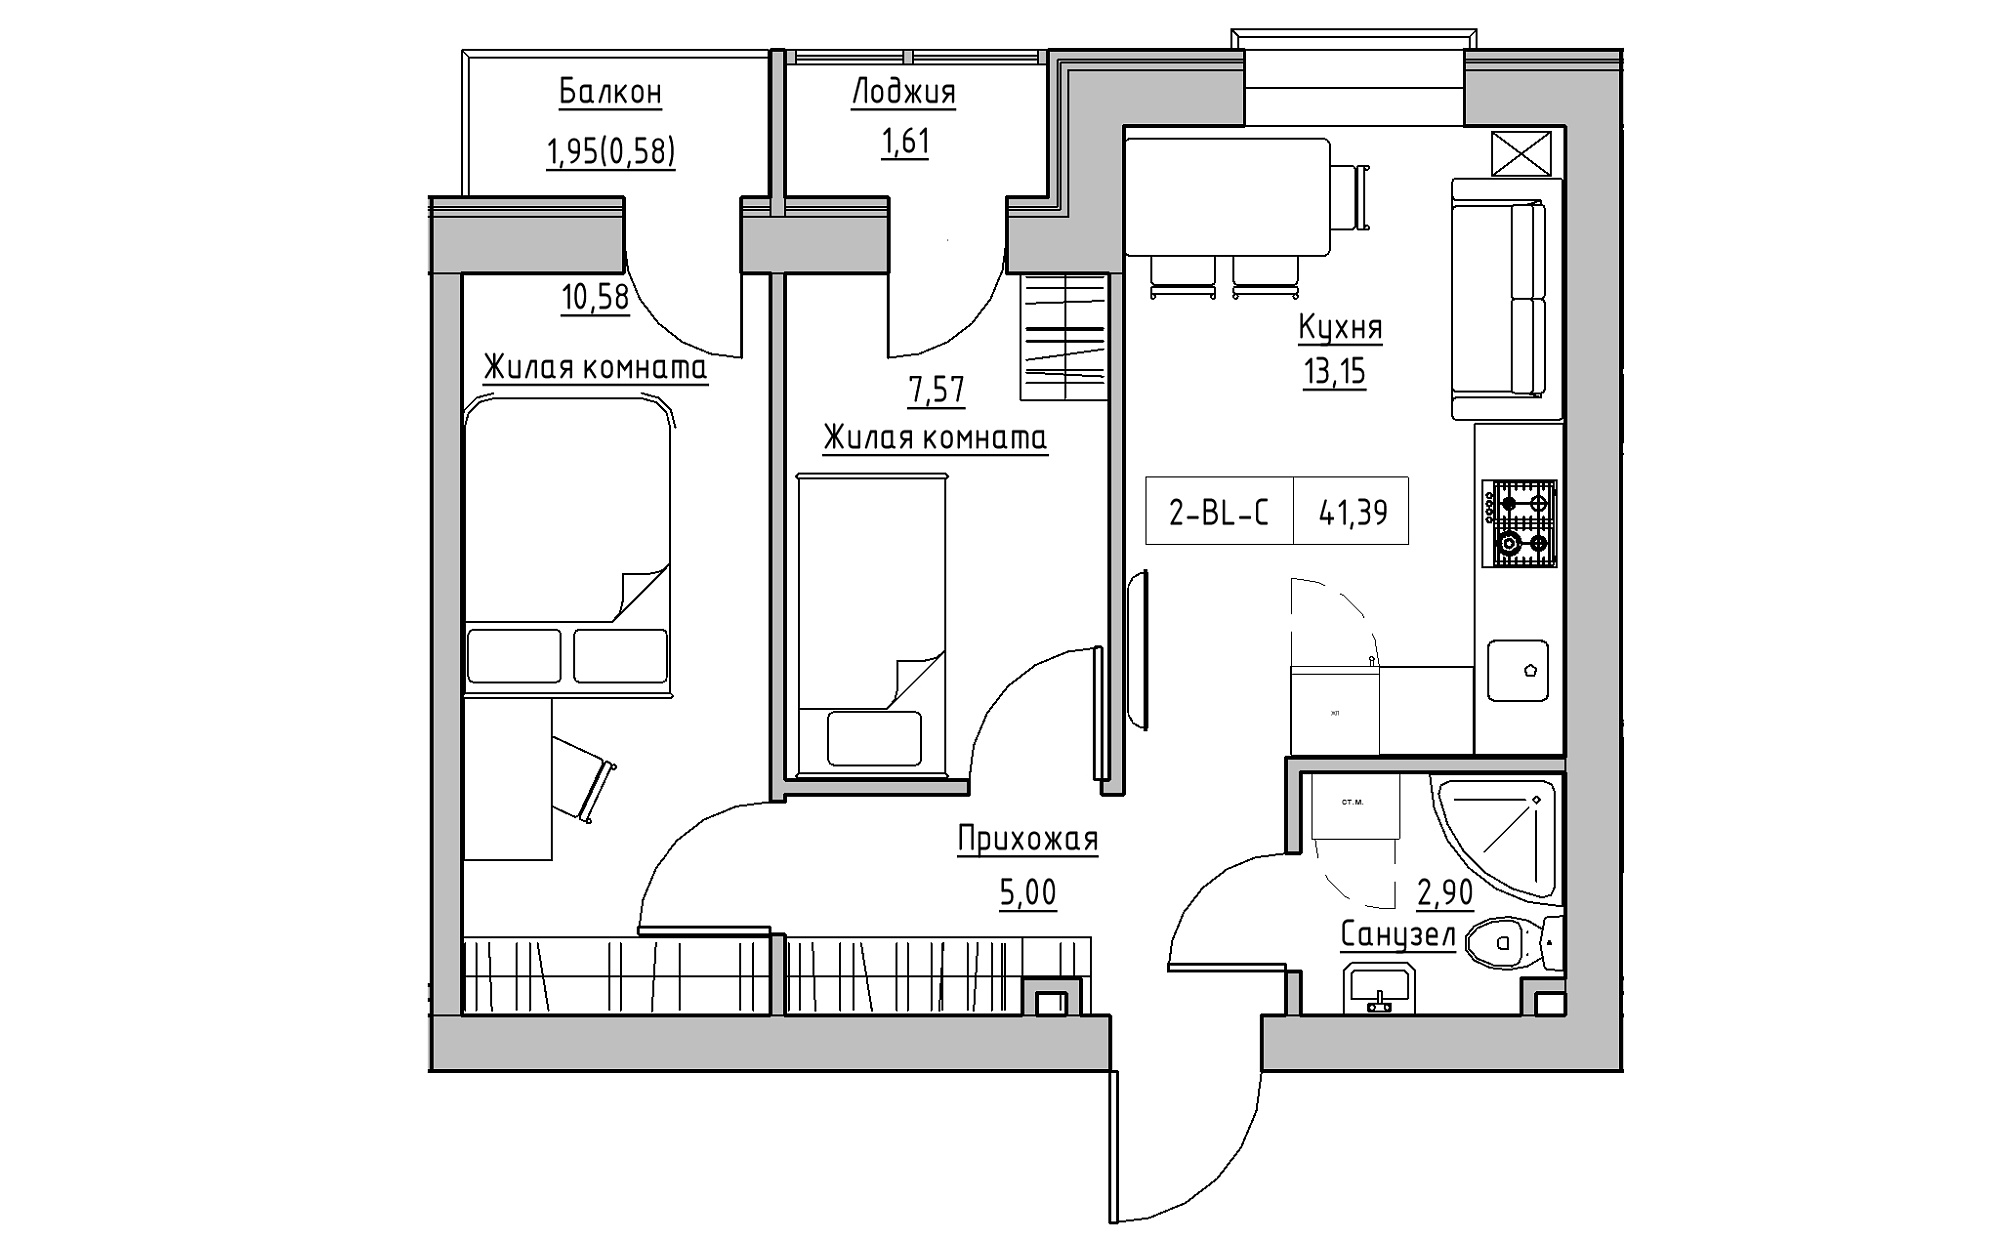 Planning 2-rm flats area 41.39m2, KS-022-02/0005.